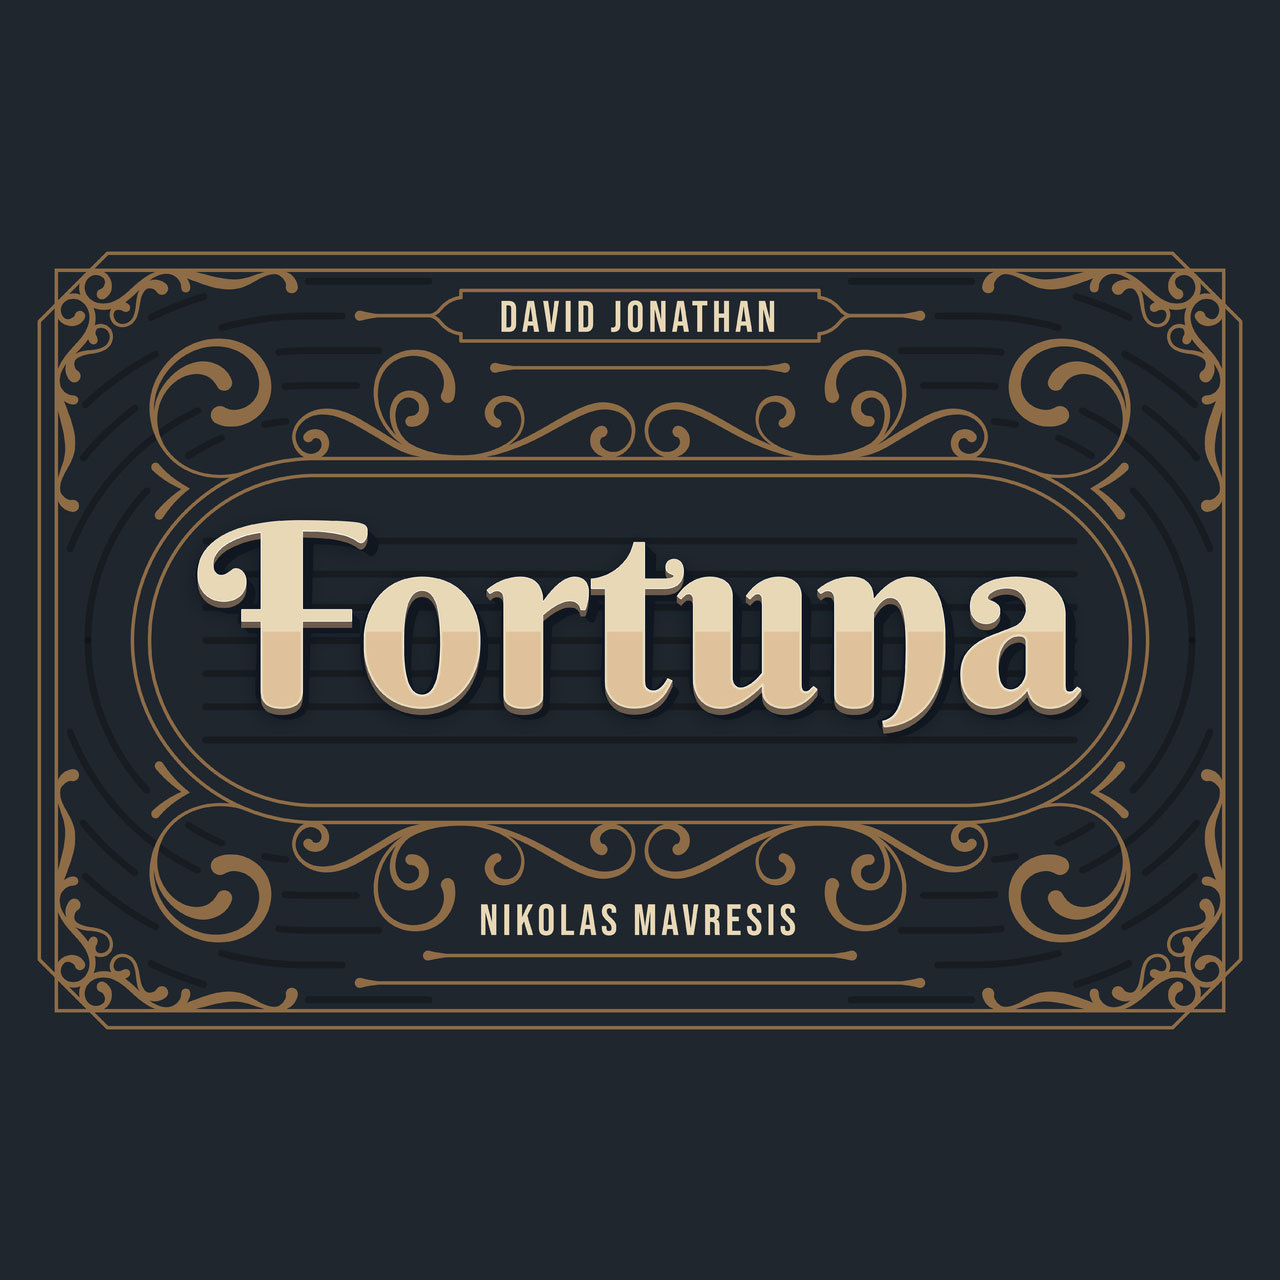 Fortuna by David Jonathan & Nikolas Mavresis (Mp4 Video + PDF Full Magic Download)